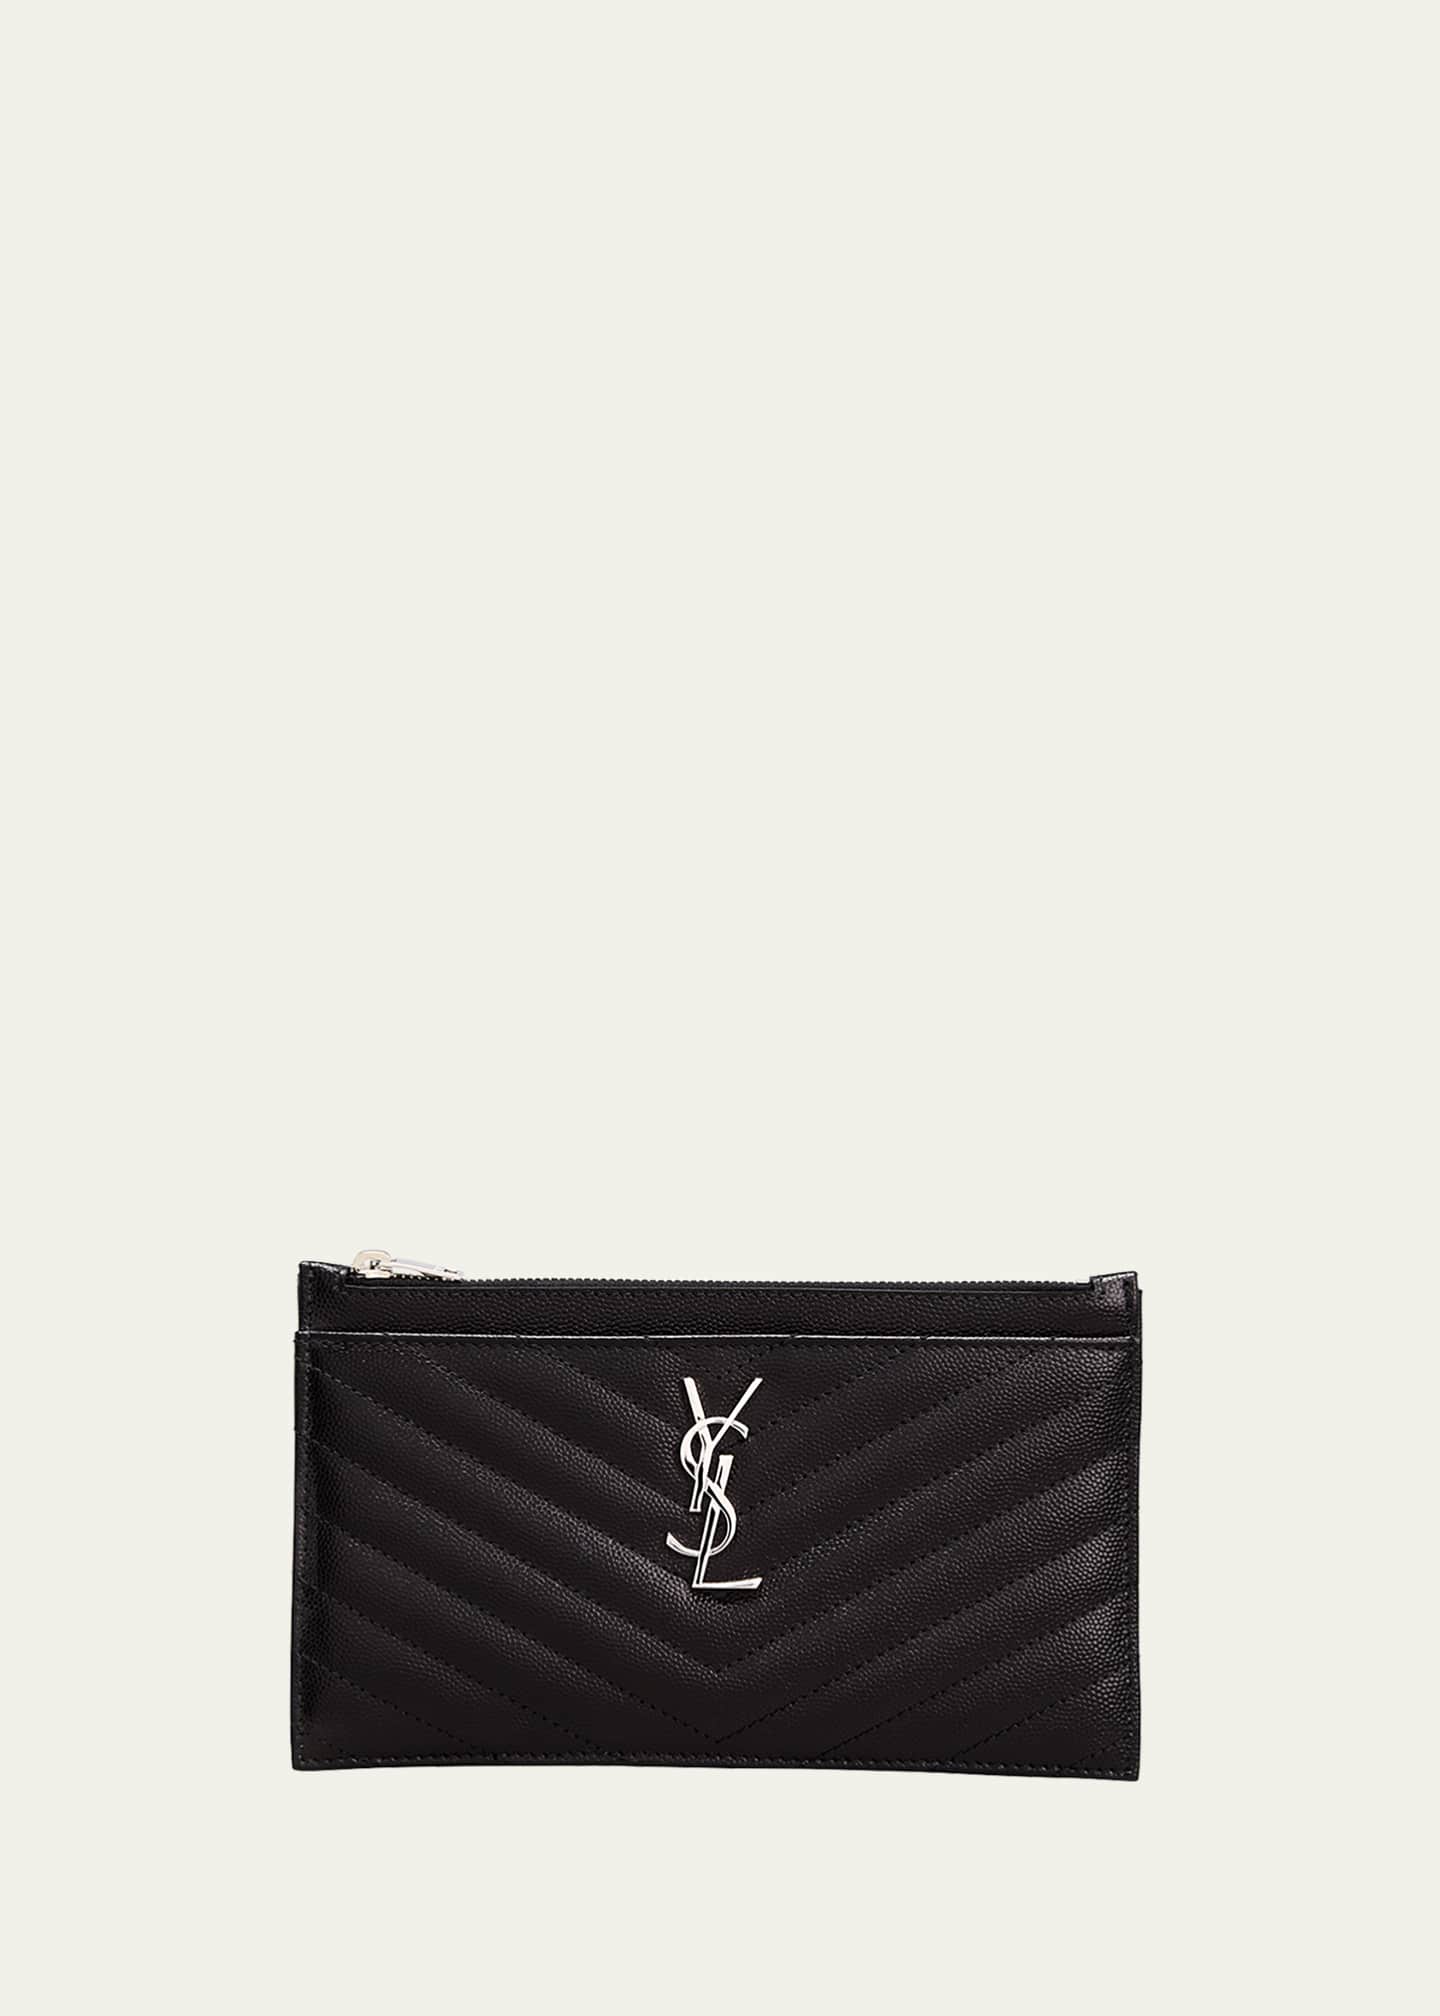 Yves Saint Laurent Black Chevron Quilted Calfskin Leather Monogram